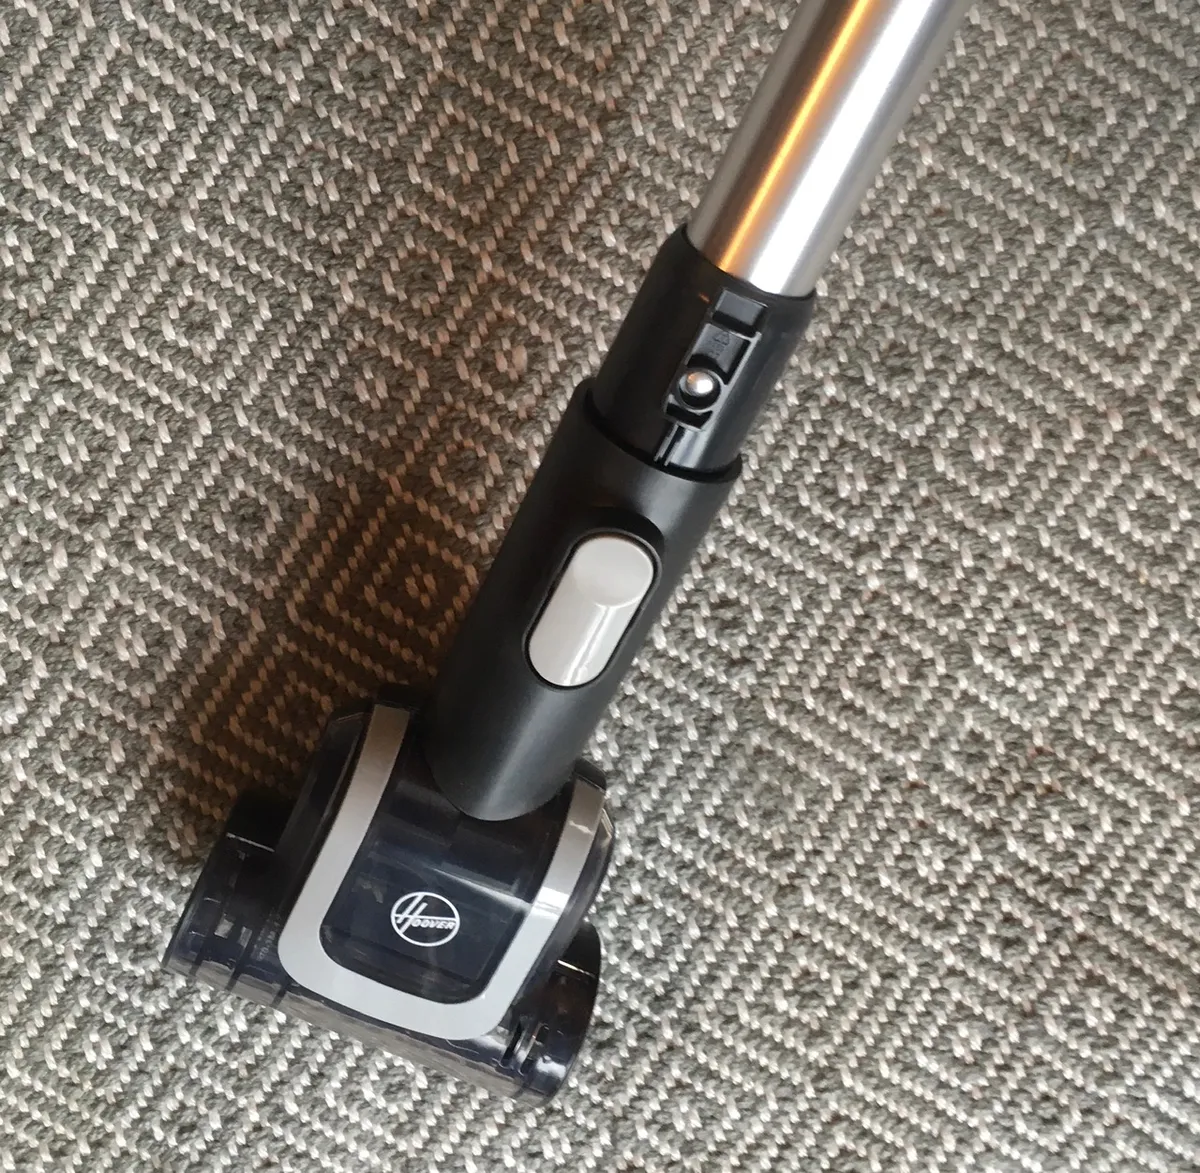 HL5 Upright pet vacuum cleaner with Anti-Twist